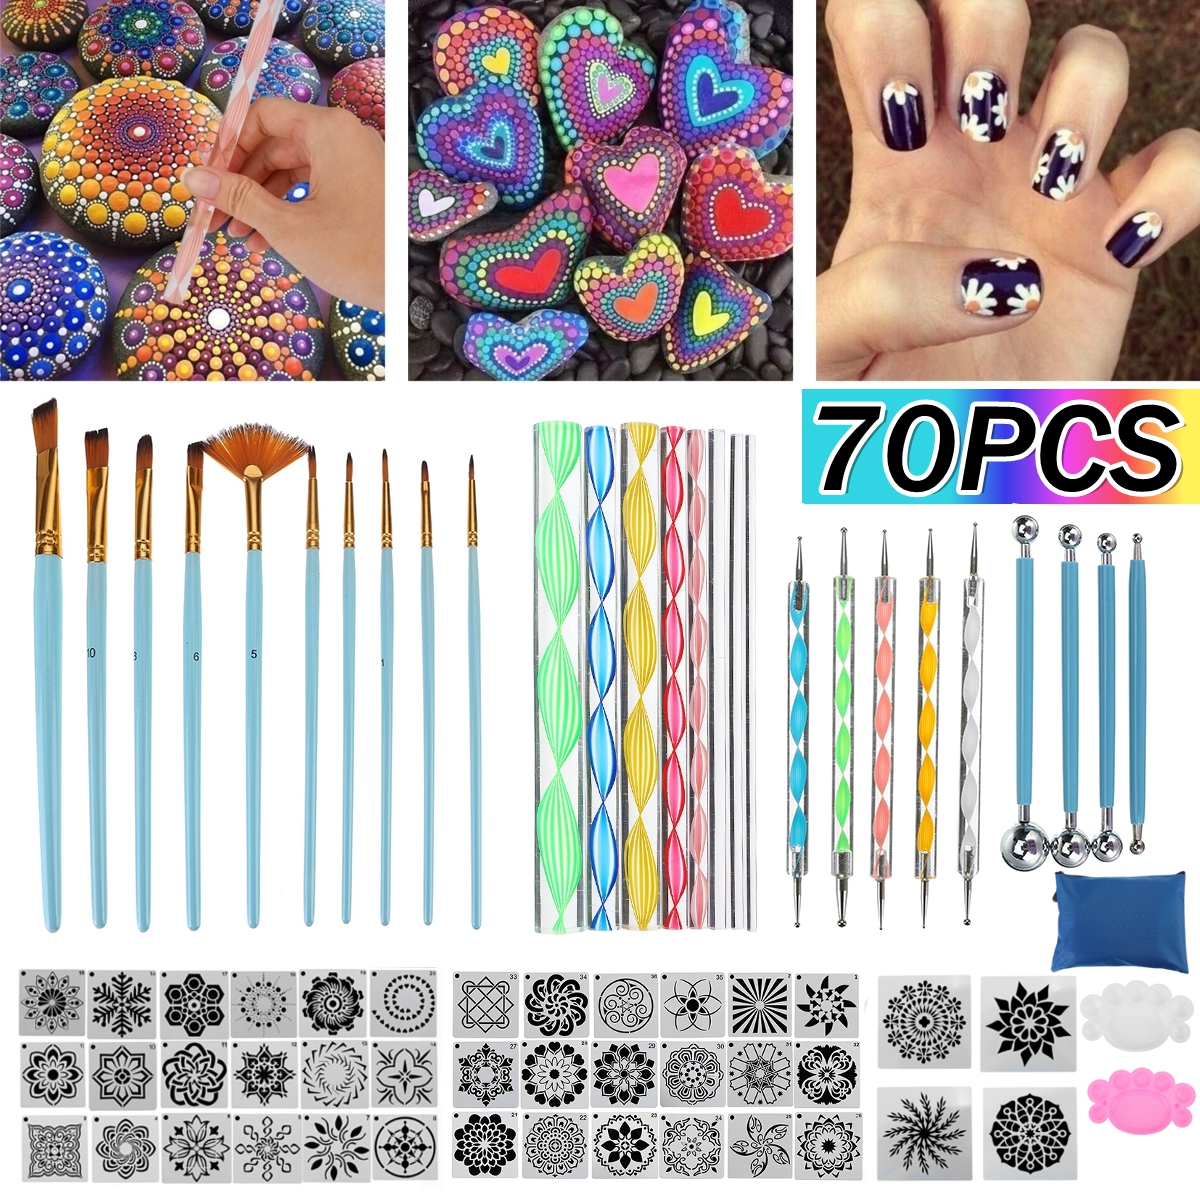 70Pcs-Mandala-Dotting-Tools-Set-Rock-Painting-Kit-Nail-Art-Craft-Pen-Paint-Stencil-Supplies-1783942-1